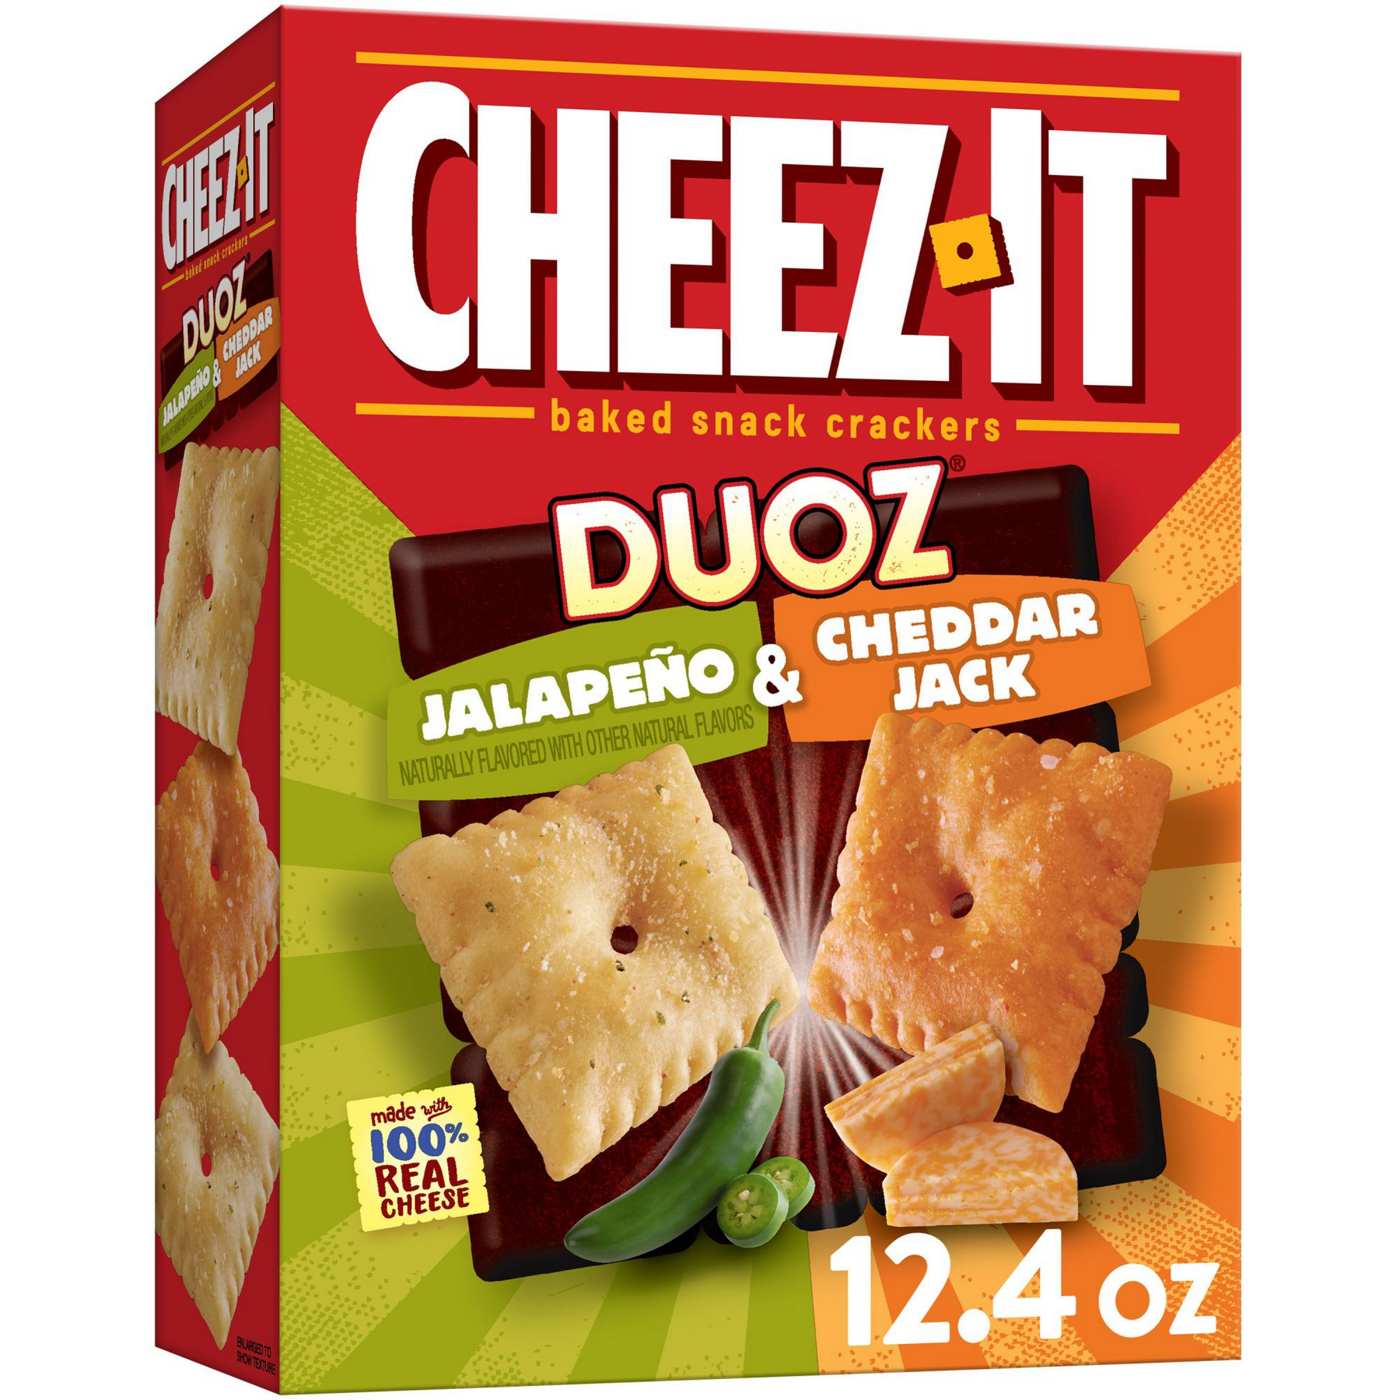 Cheez-It DUOZ Jalapeno Cheddar Jack Crackers; image 3 of 5